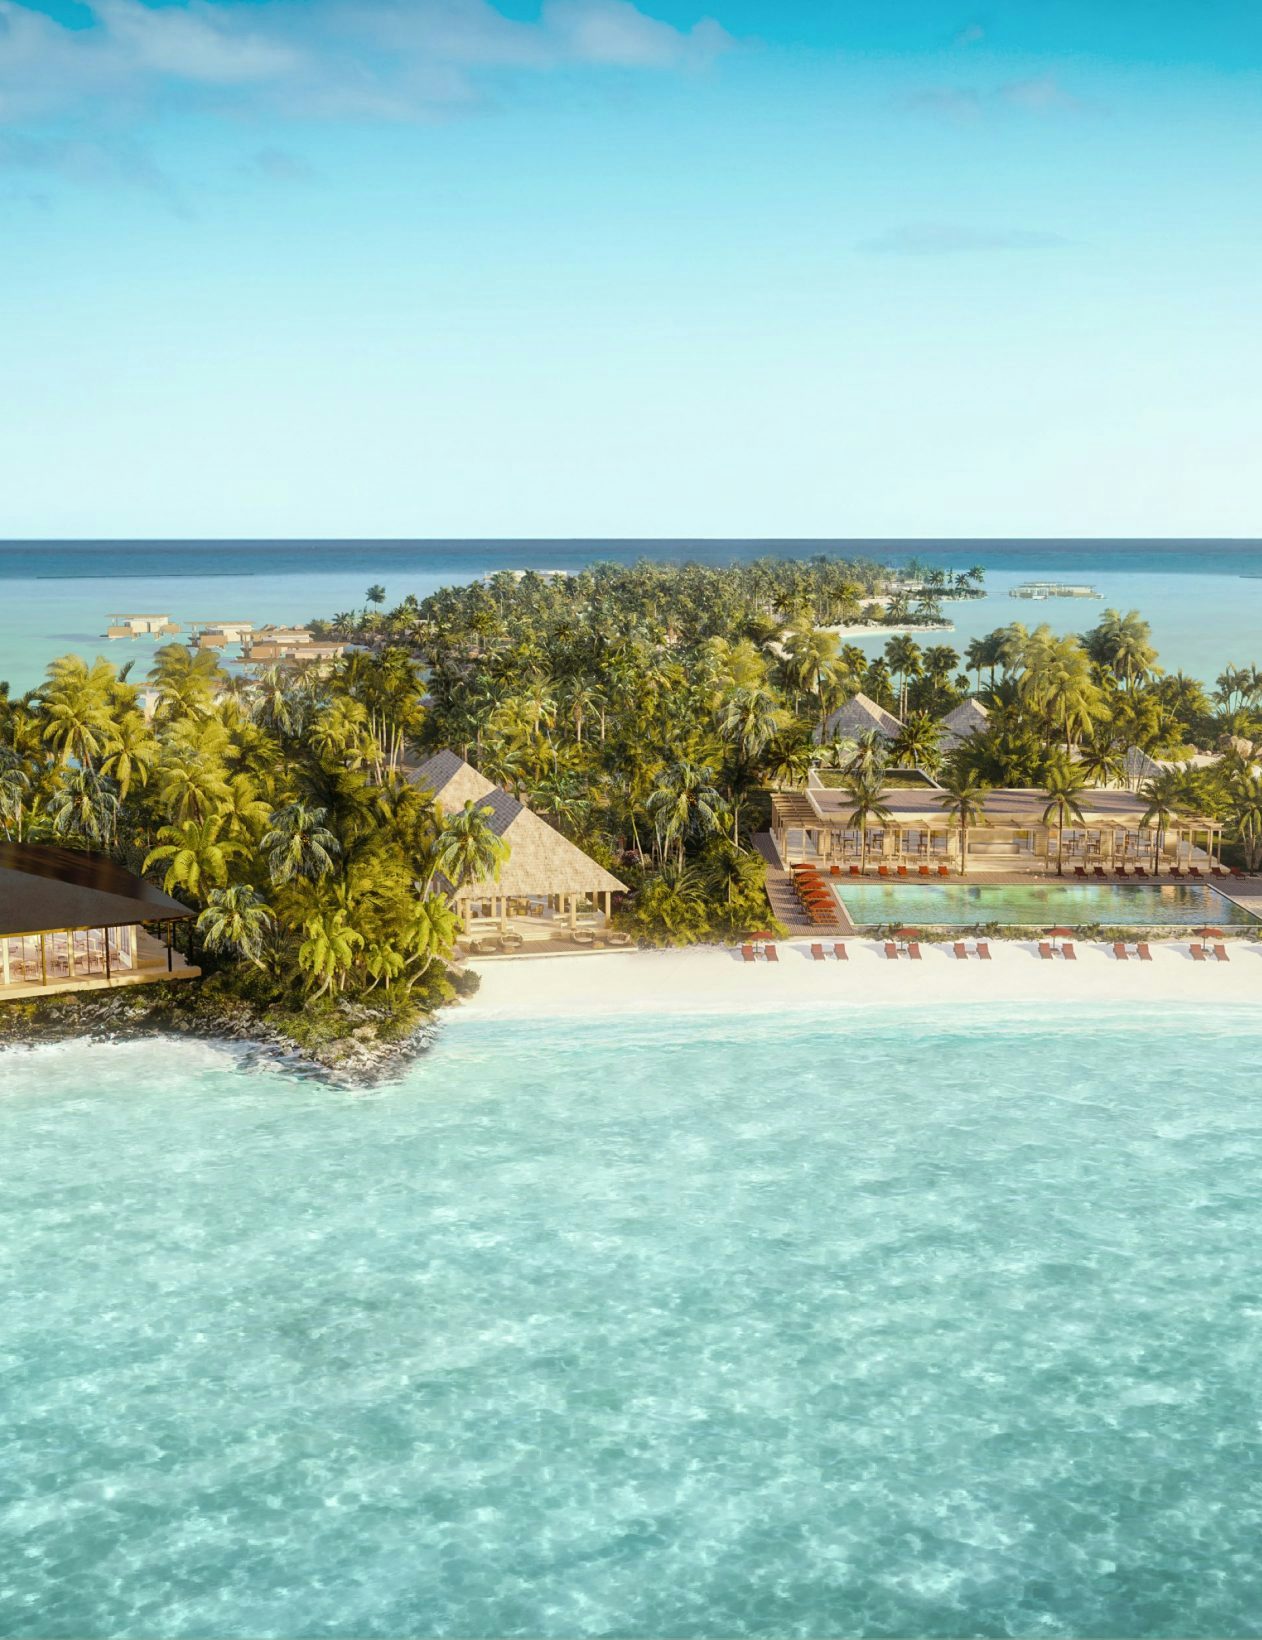 Bulgari to open a new resort in the Maldives